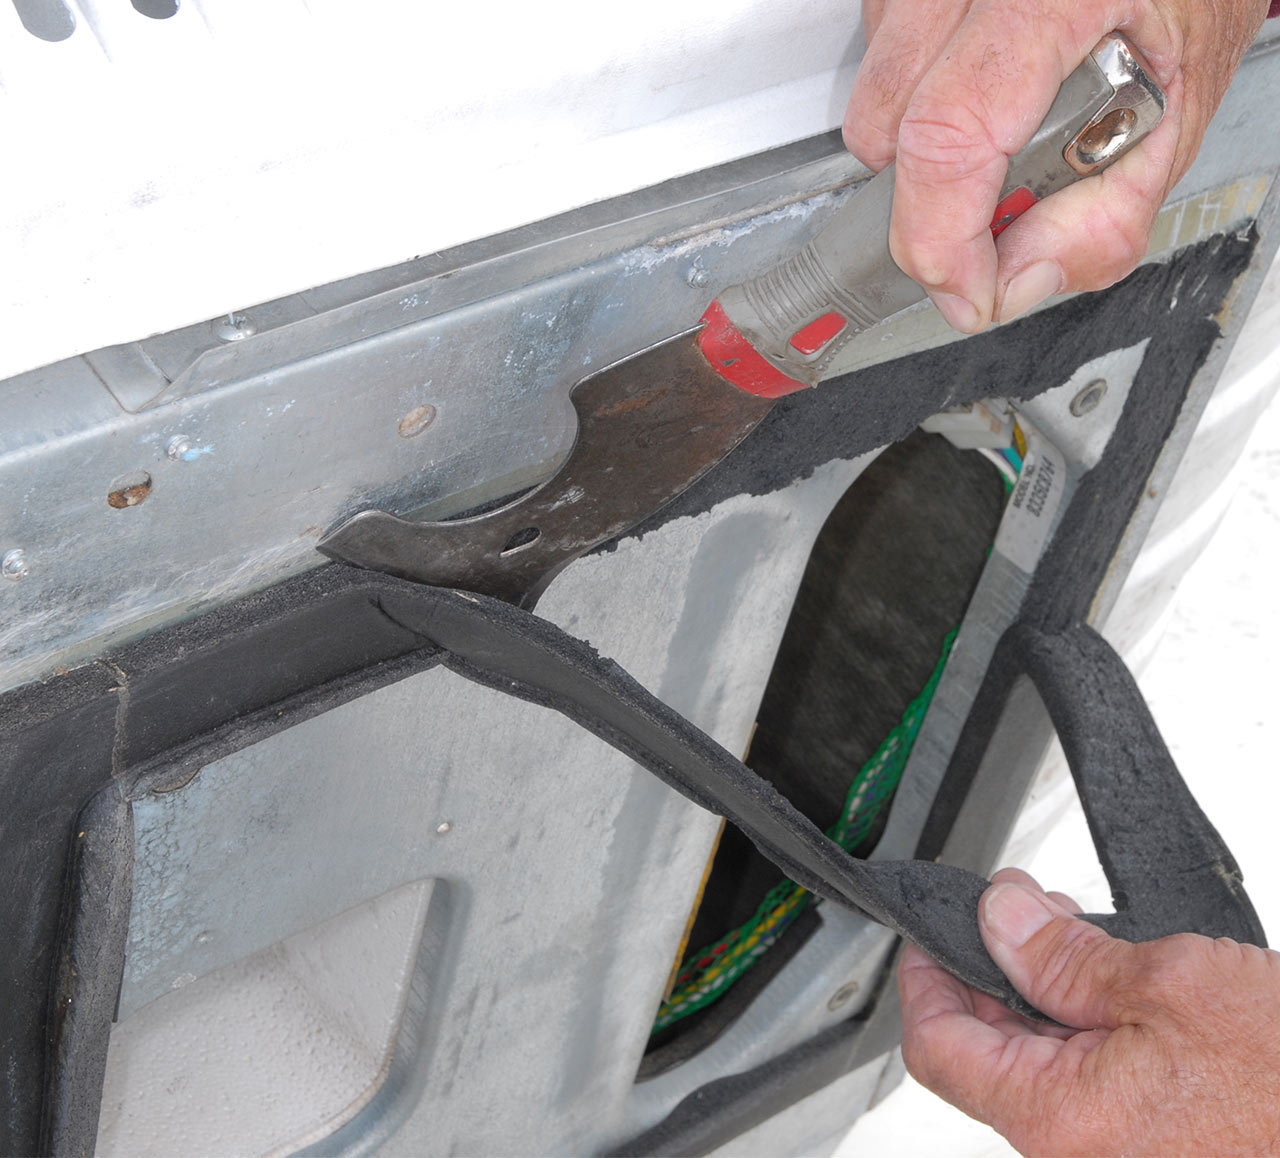 Repairing a worn air conditioning gasket